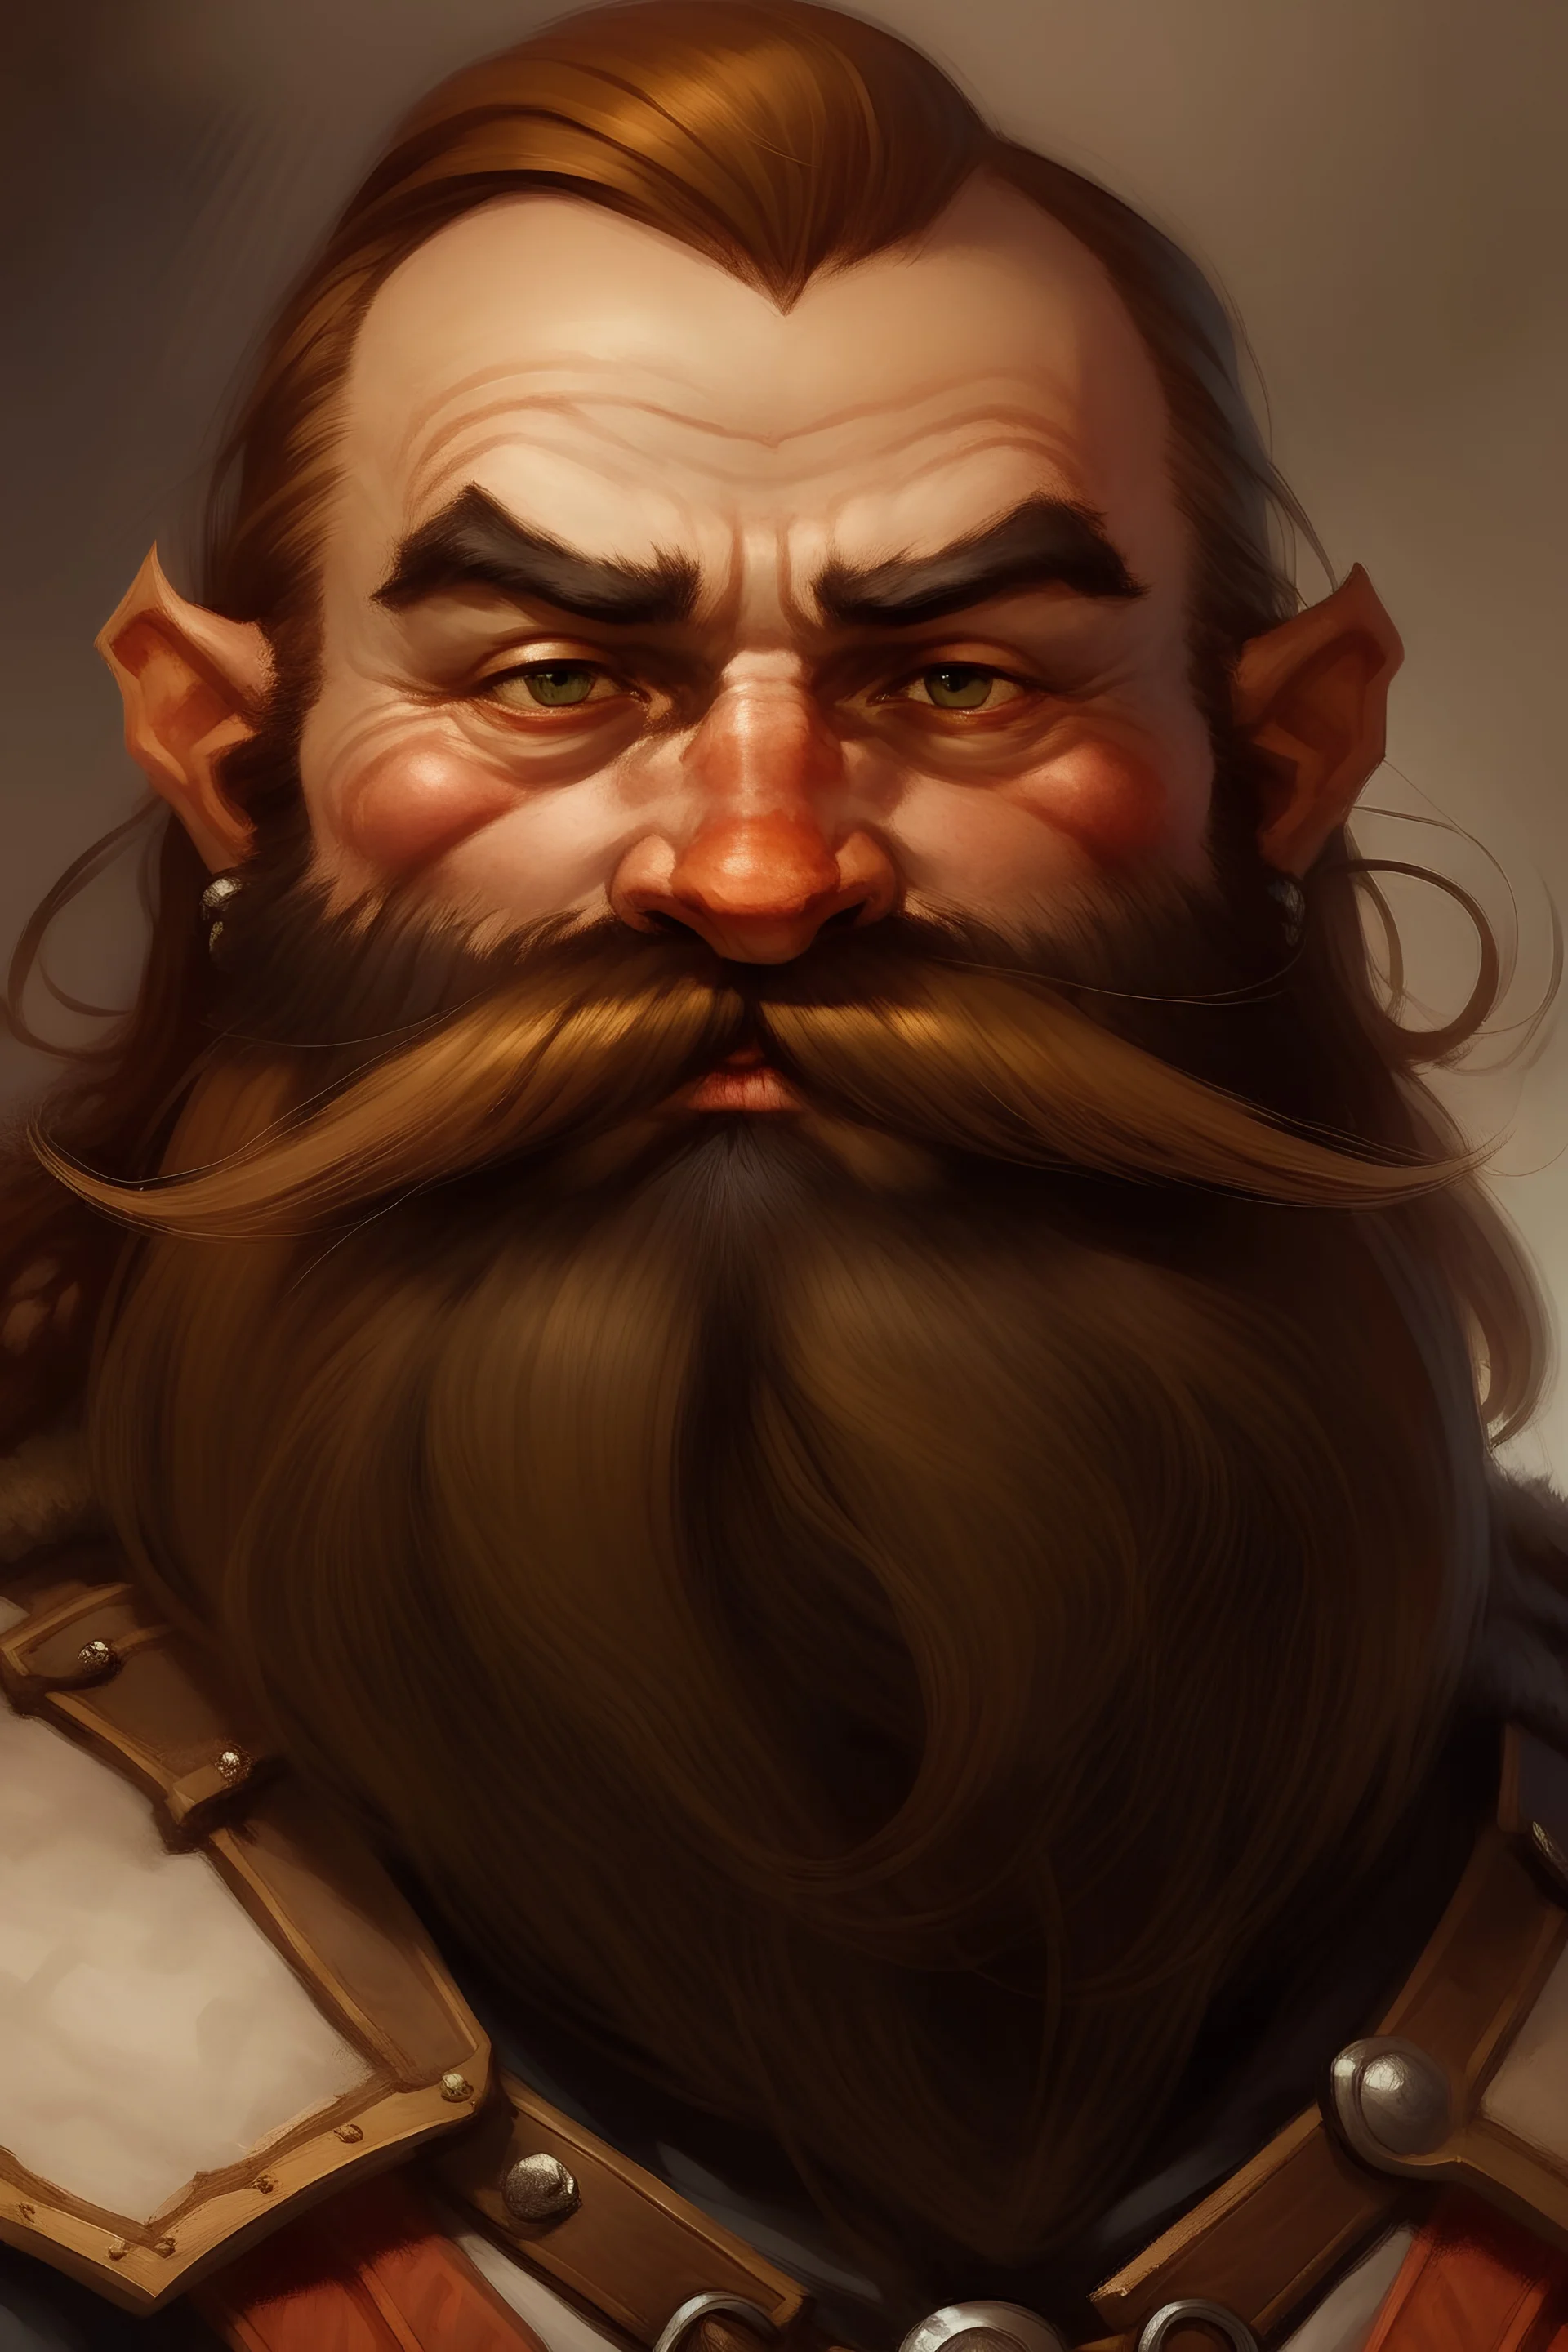 dnd potrait dwarf with no beard. big mustache